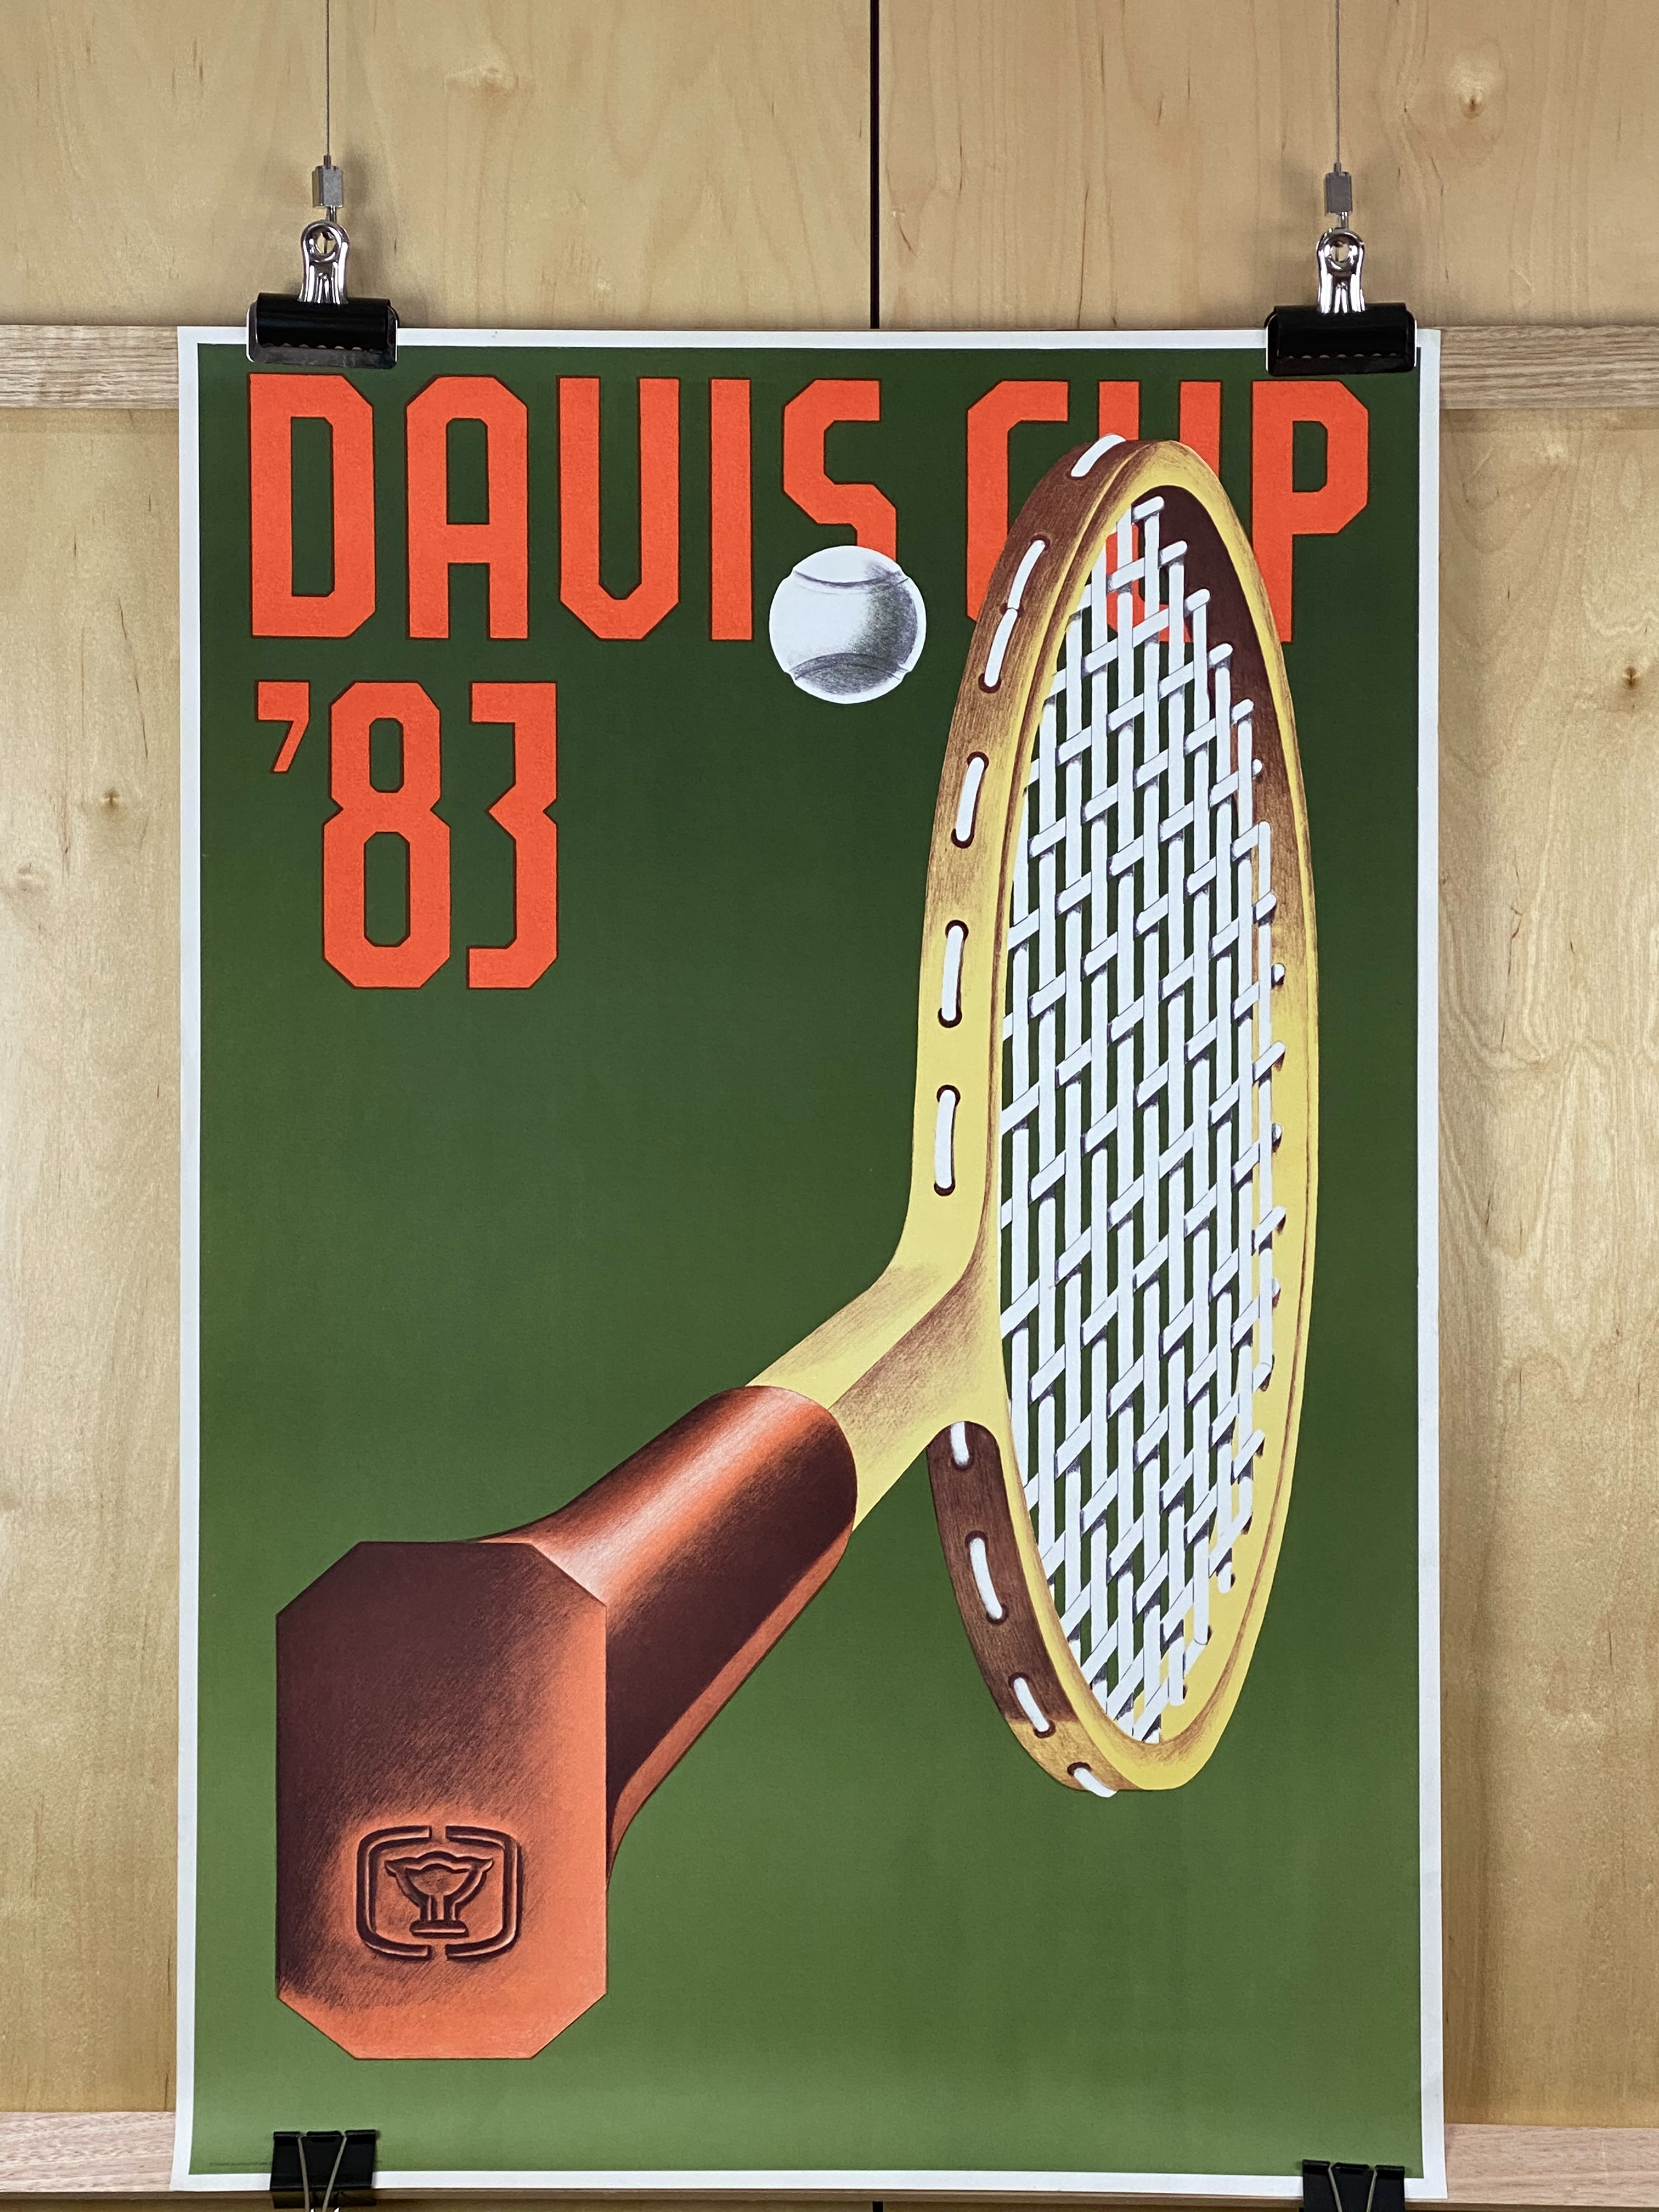 1983 Davis Cup